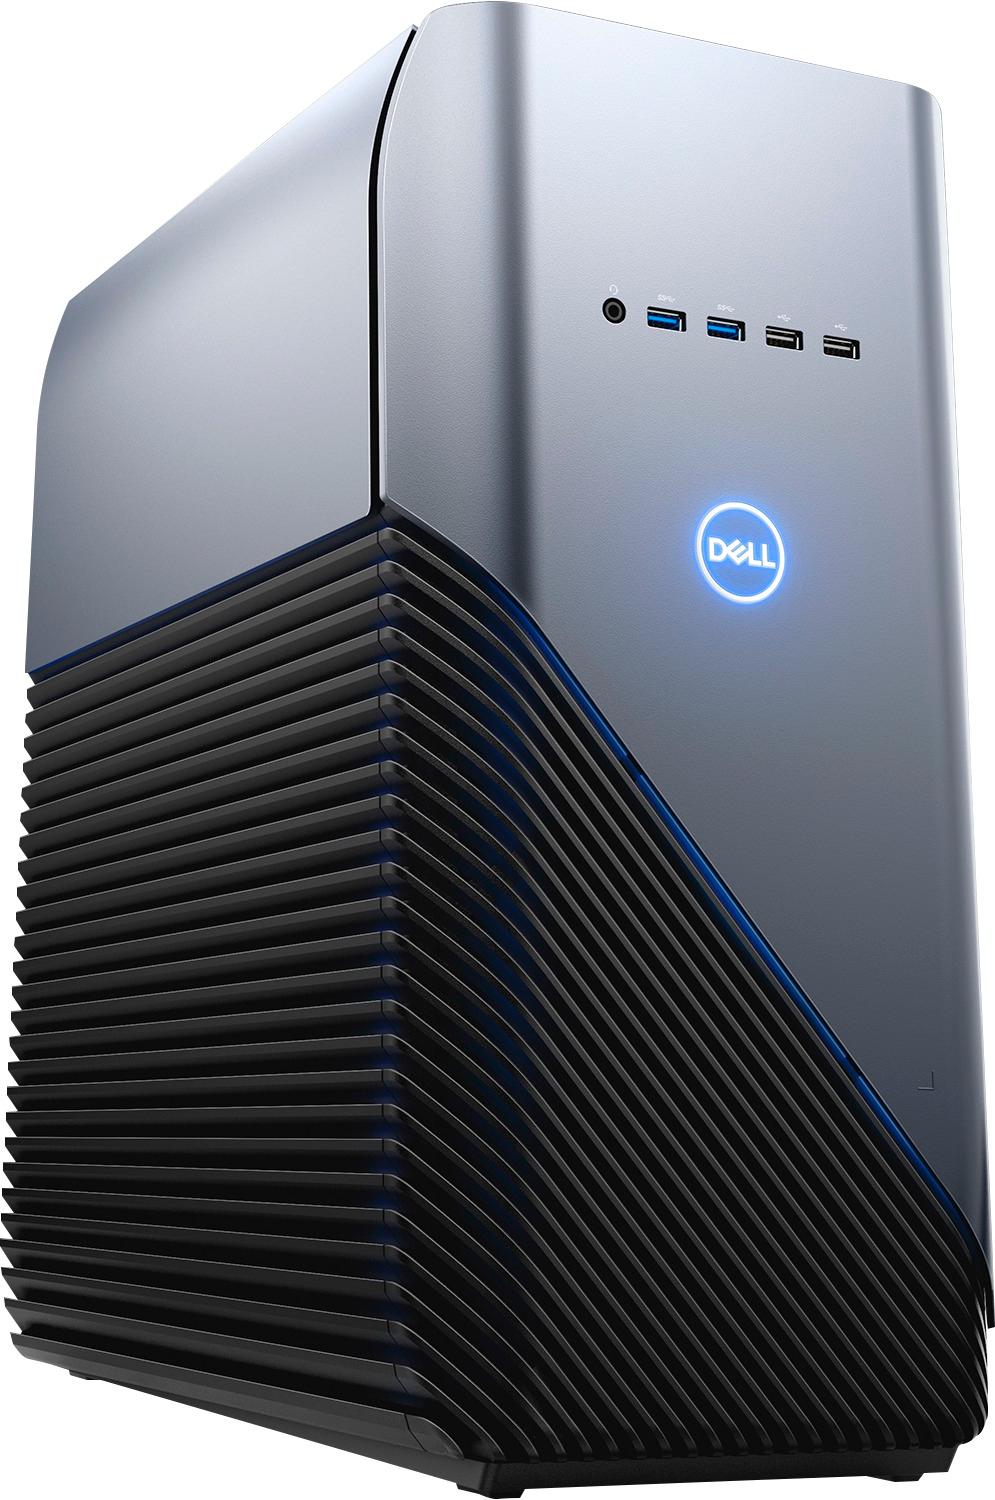 Best Buy: Dell Inspiron Gaming Desktop- Intel Core i7 8GB Memory 